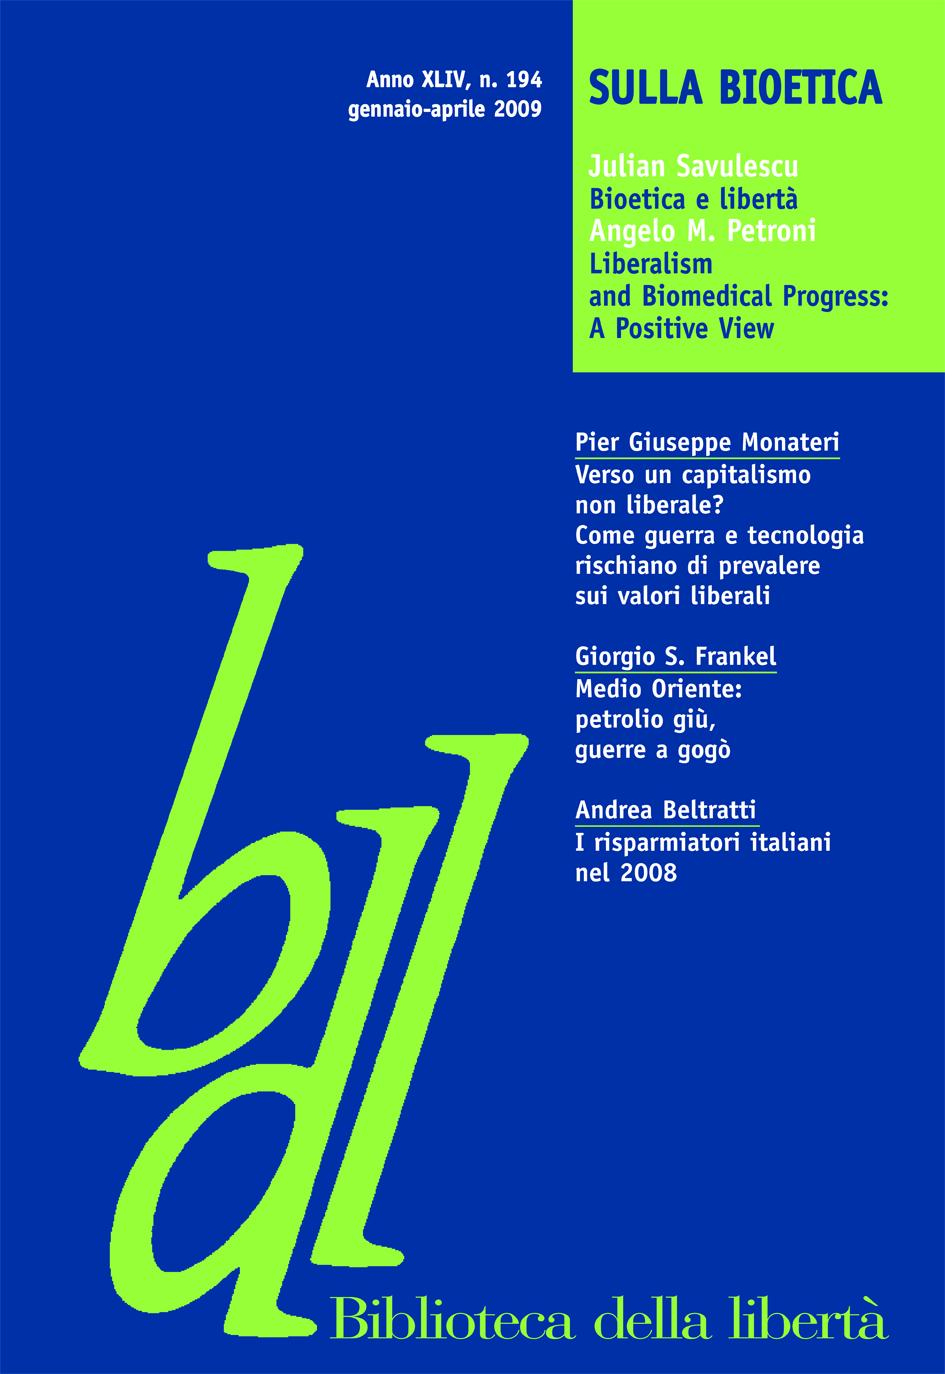 Categoria/Category Anno XLIV, n. 194, gennaio-aprile 2009